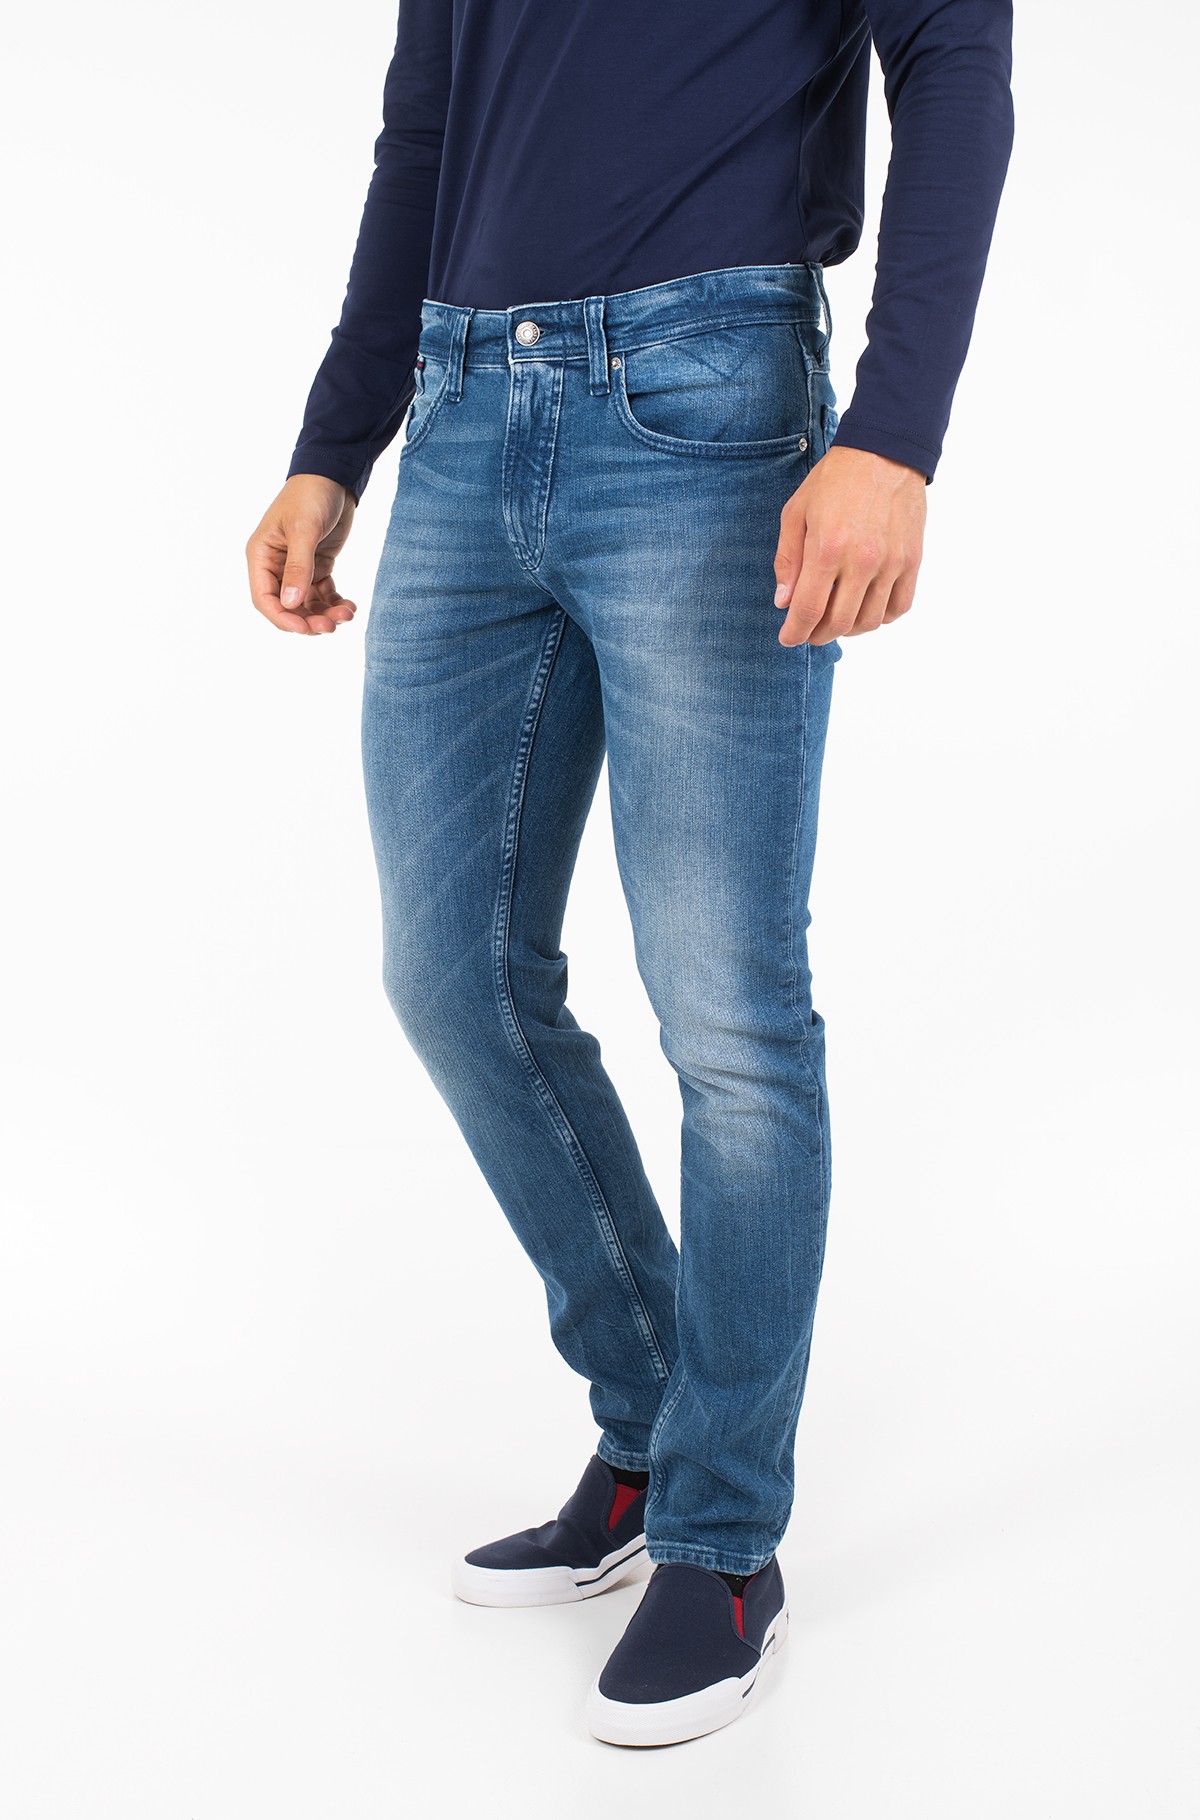 rival enaguas Sorprendido Jeans ORIGINAL TAPERED RONNIE BEMB Tommy Jeans, Mens Jeans | Denim Dream  E-pood